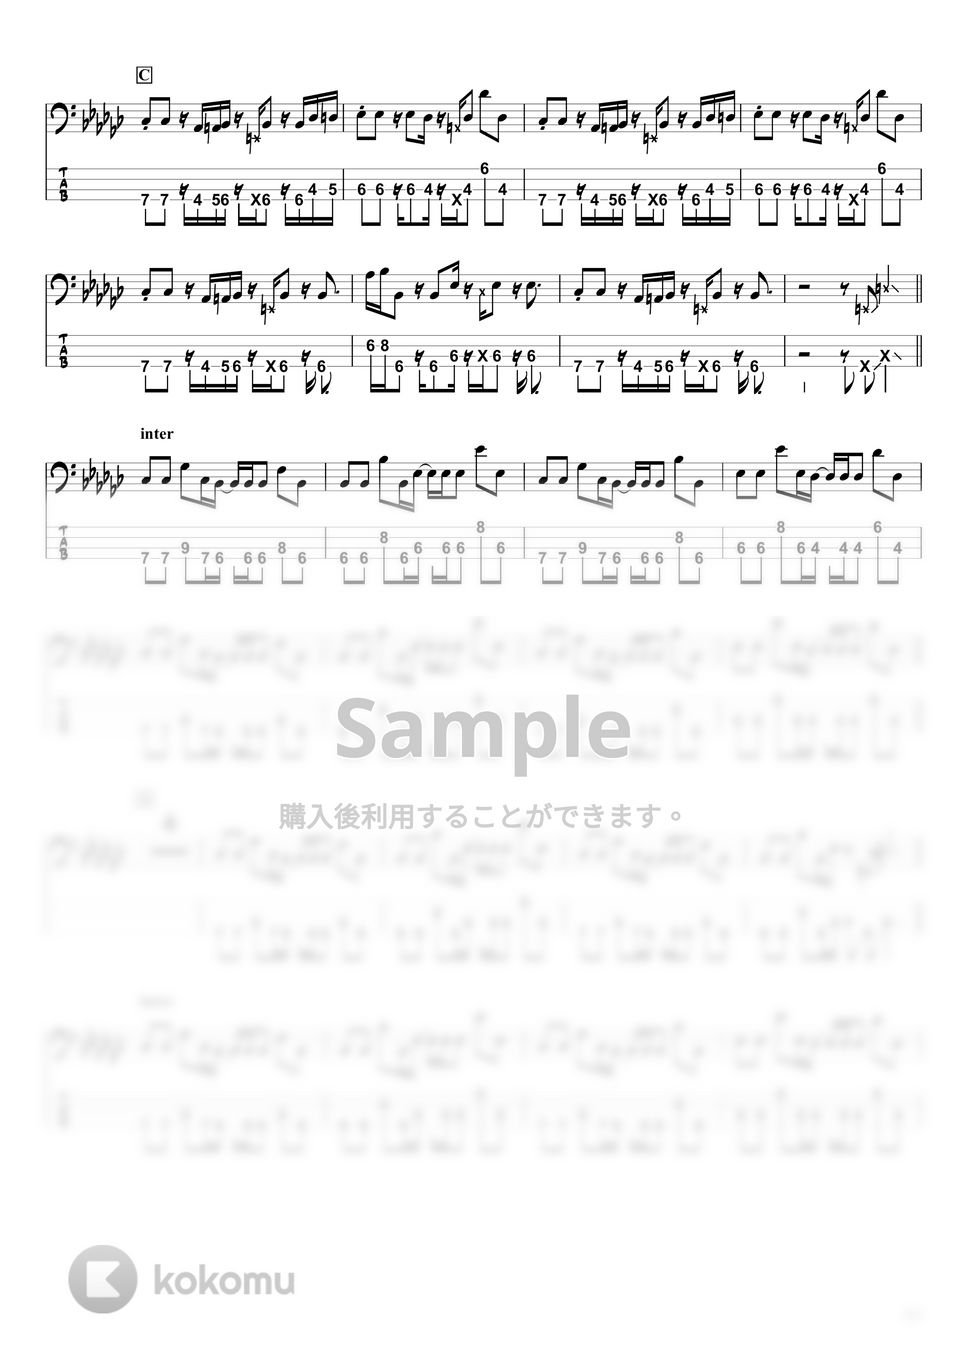 yama - 春を告げる (ベースTAB譜 / ☆4弦ベース対応) by swbass